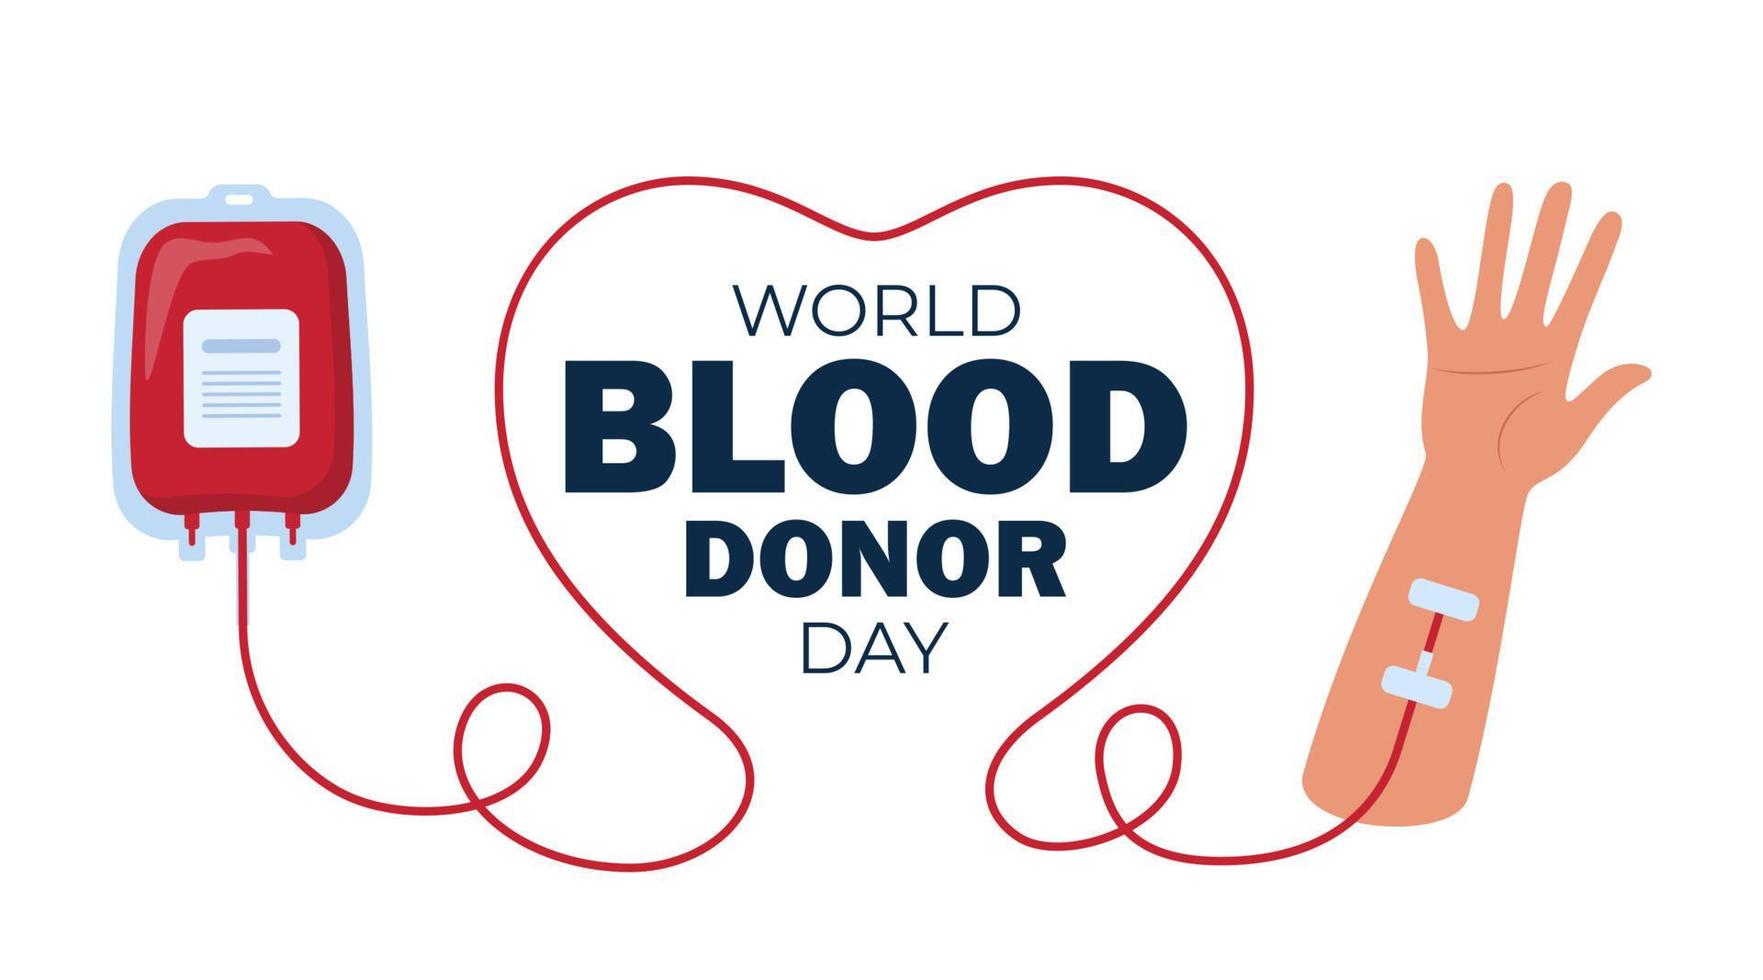 Plakat zum Weltblutspendetag. mensch spendet blut, blutbeutel und hand. Vektor-Illustration. vektor